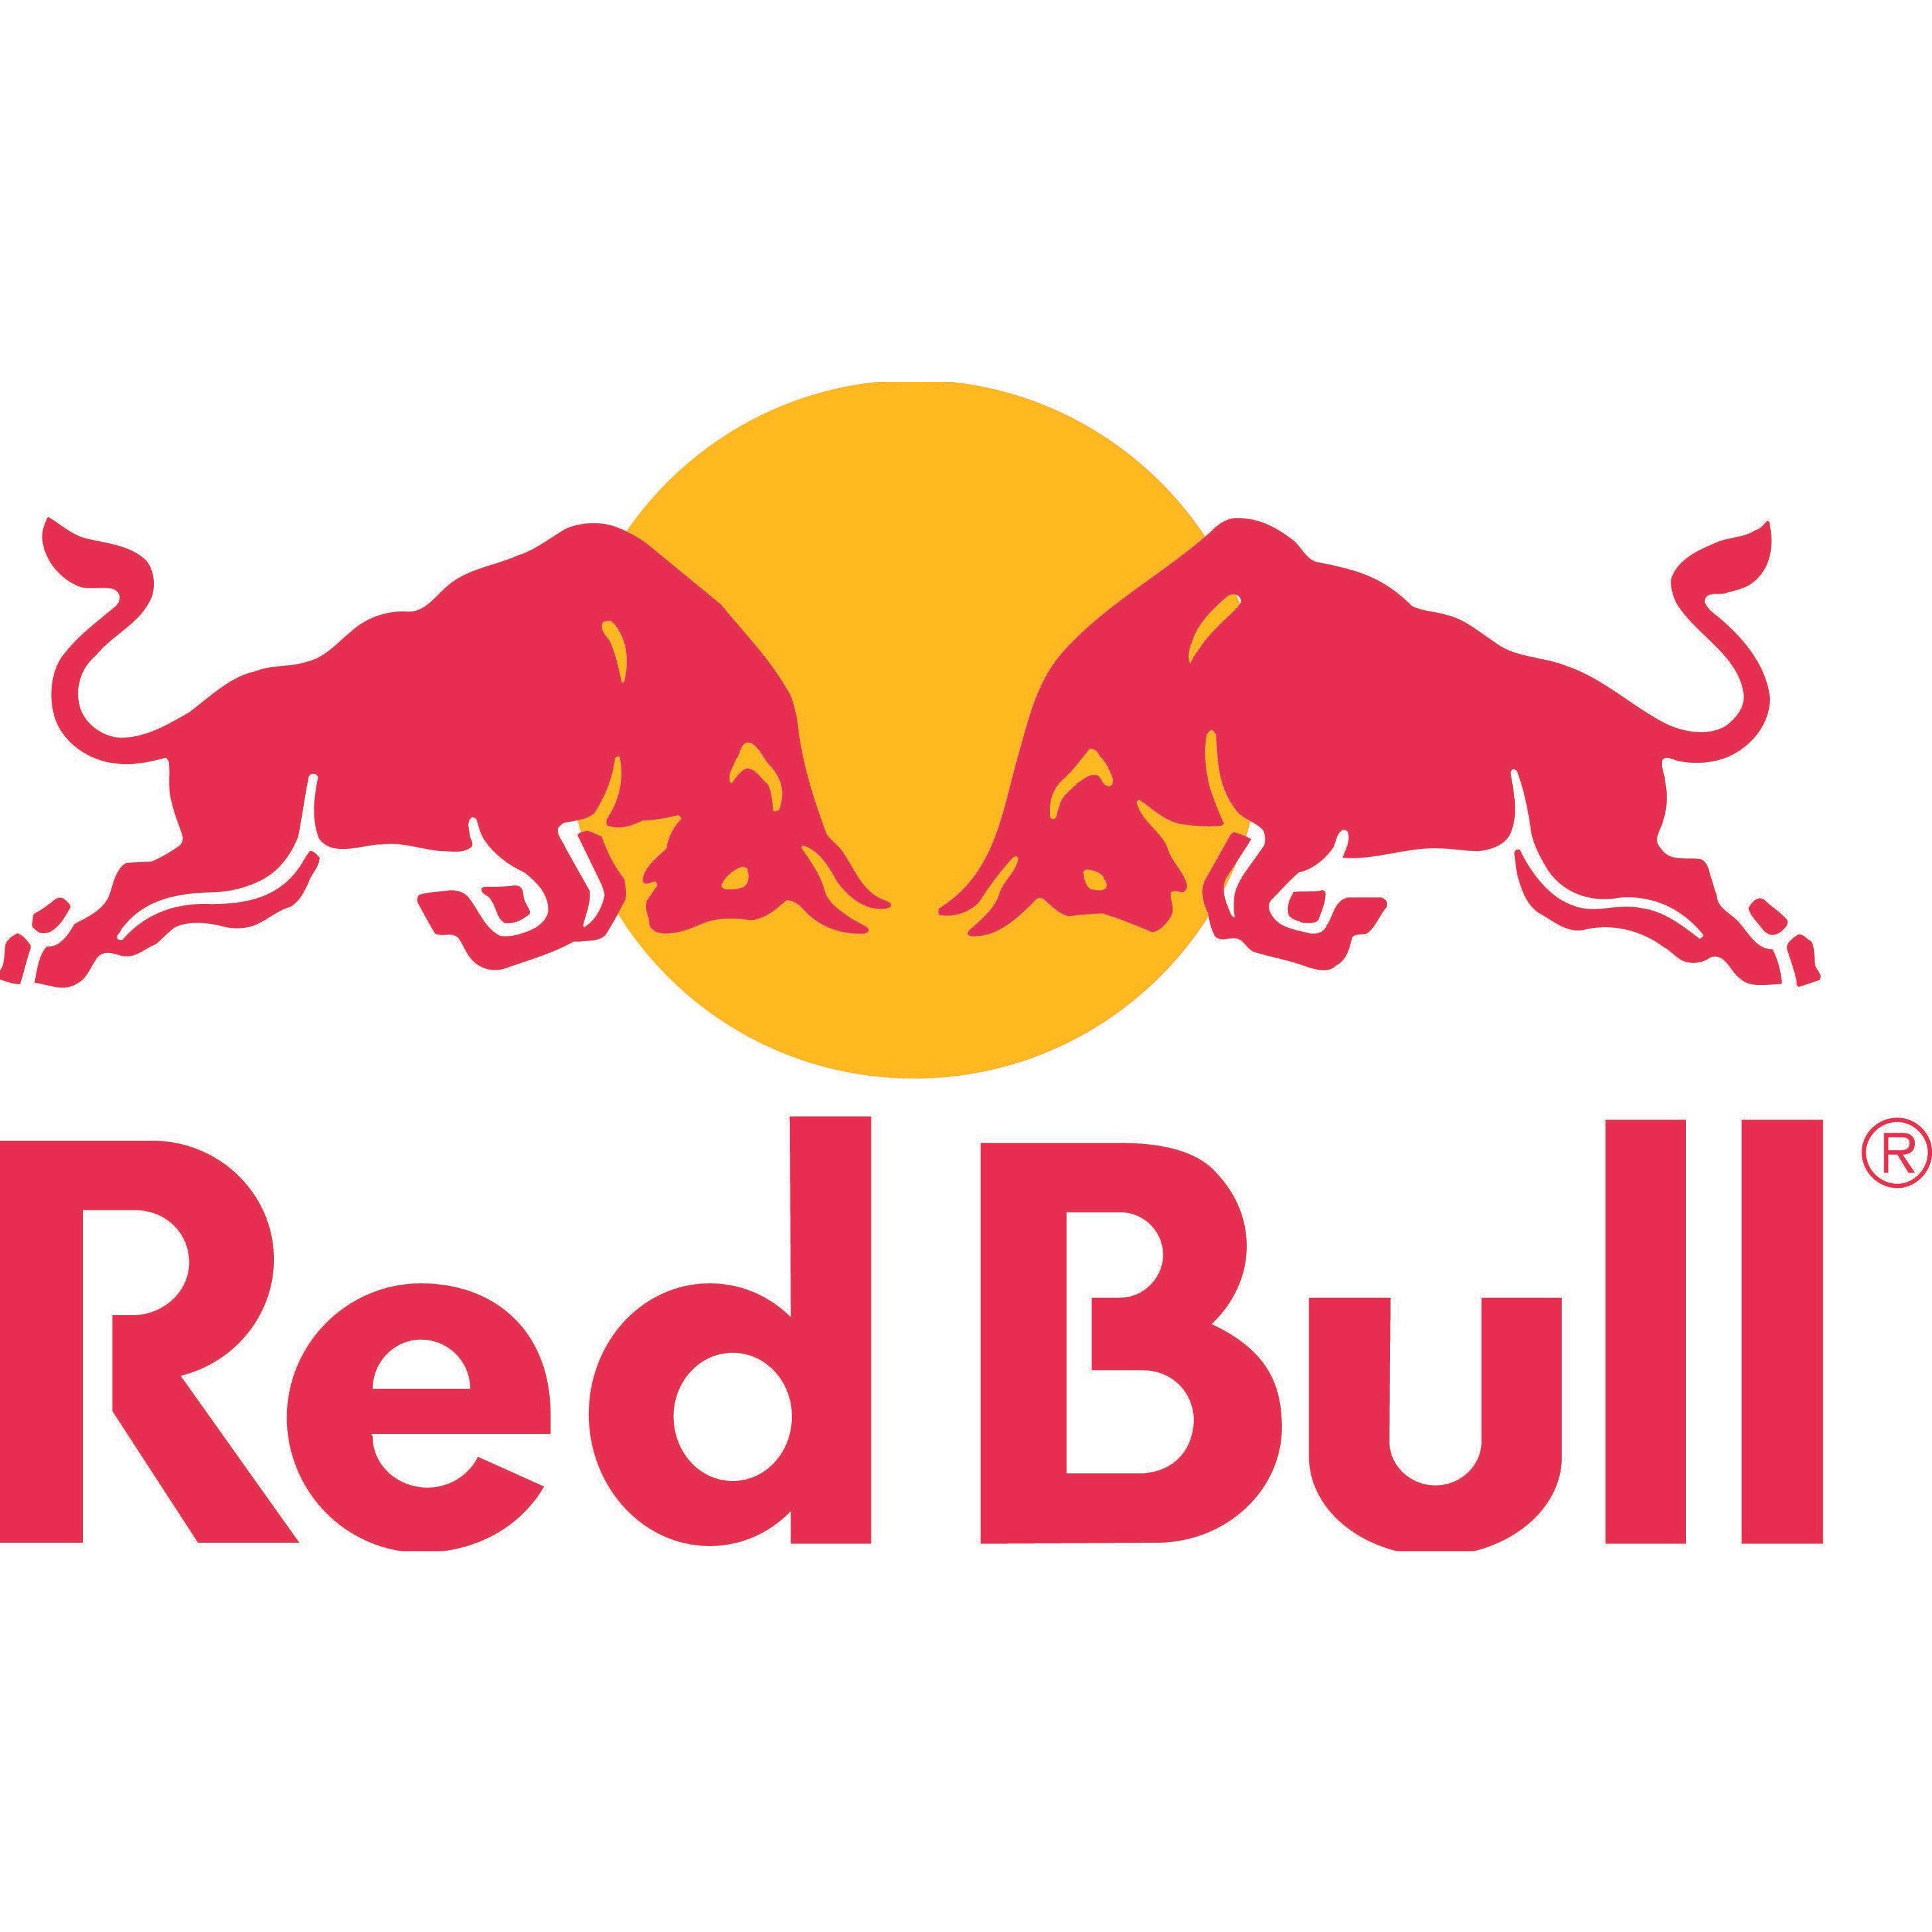 High Res Logo - Red Bull Logo High Res 2